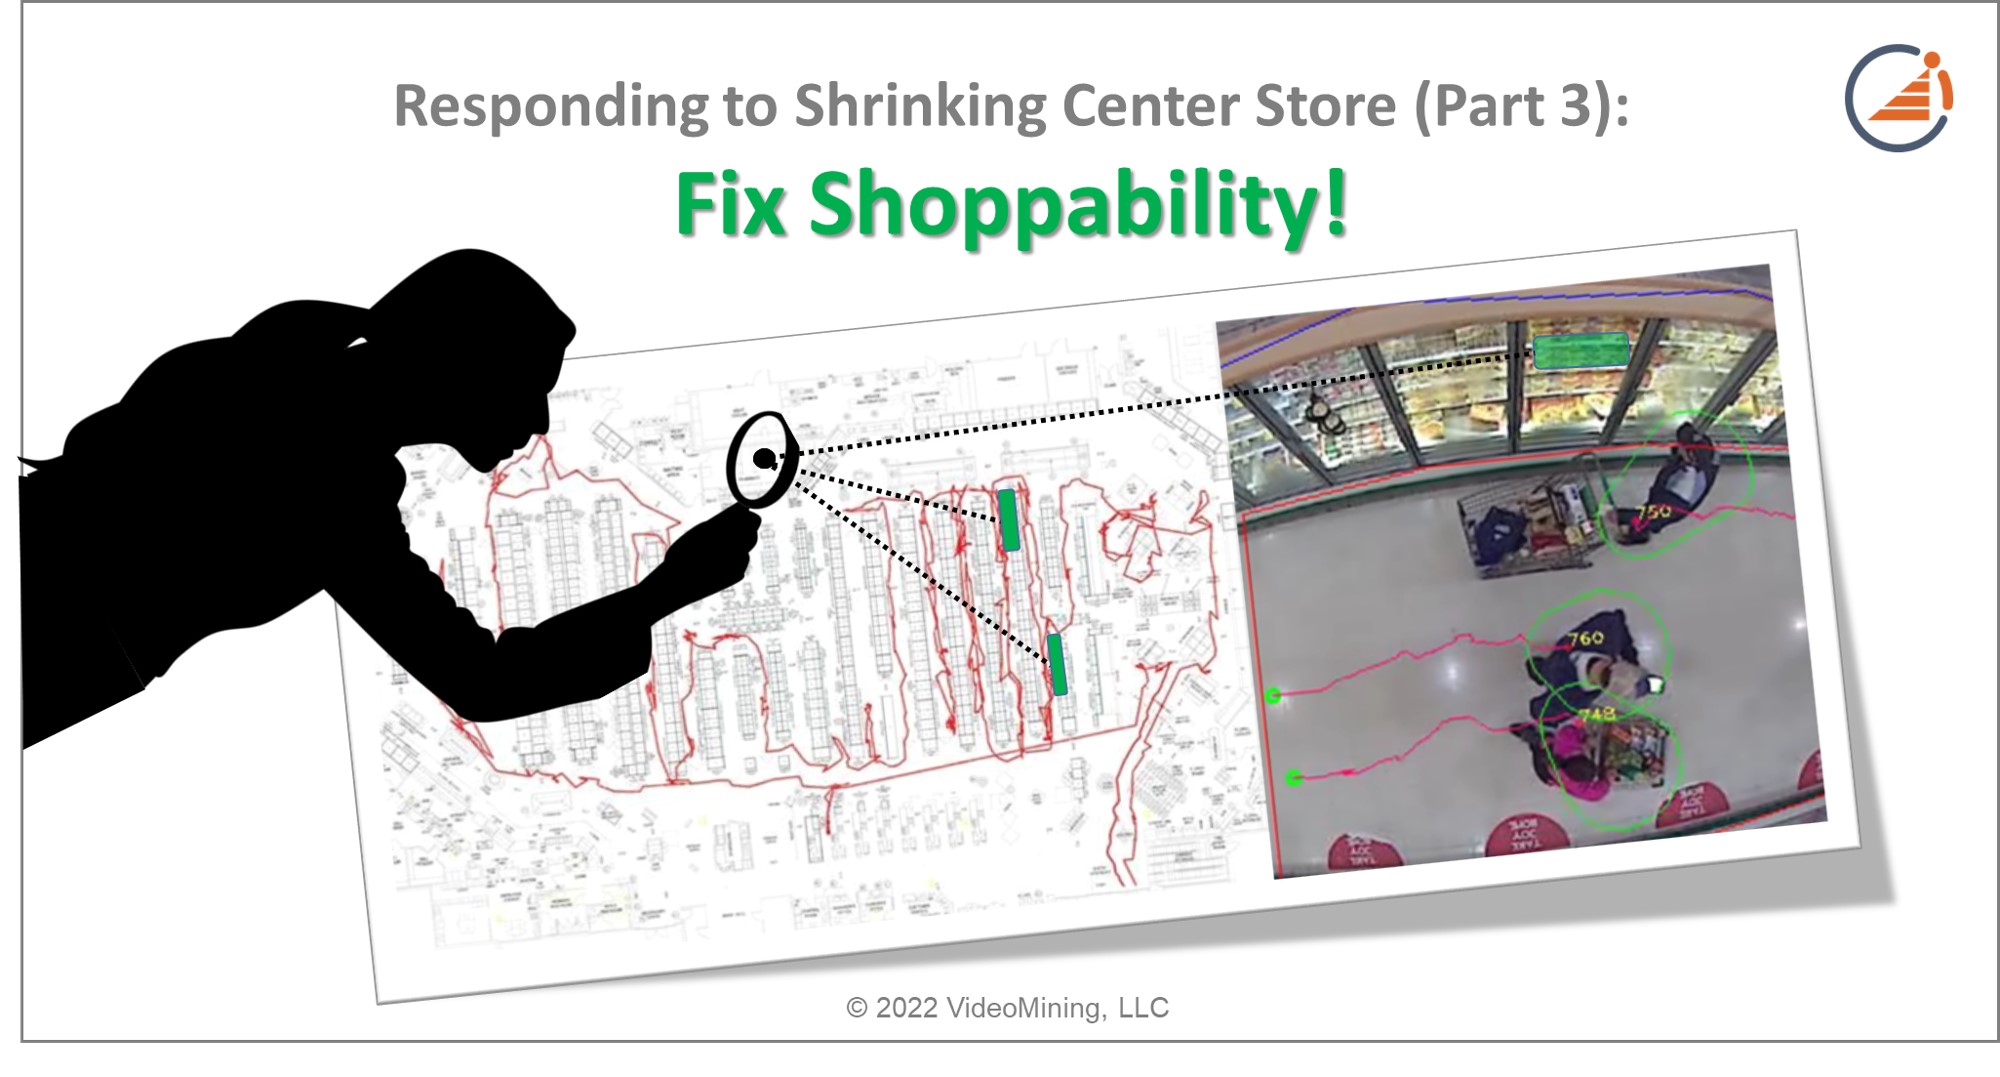 Responding to Shrinking Center Store (3): Fix Shoppability!